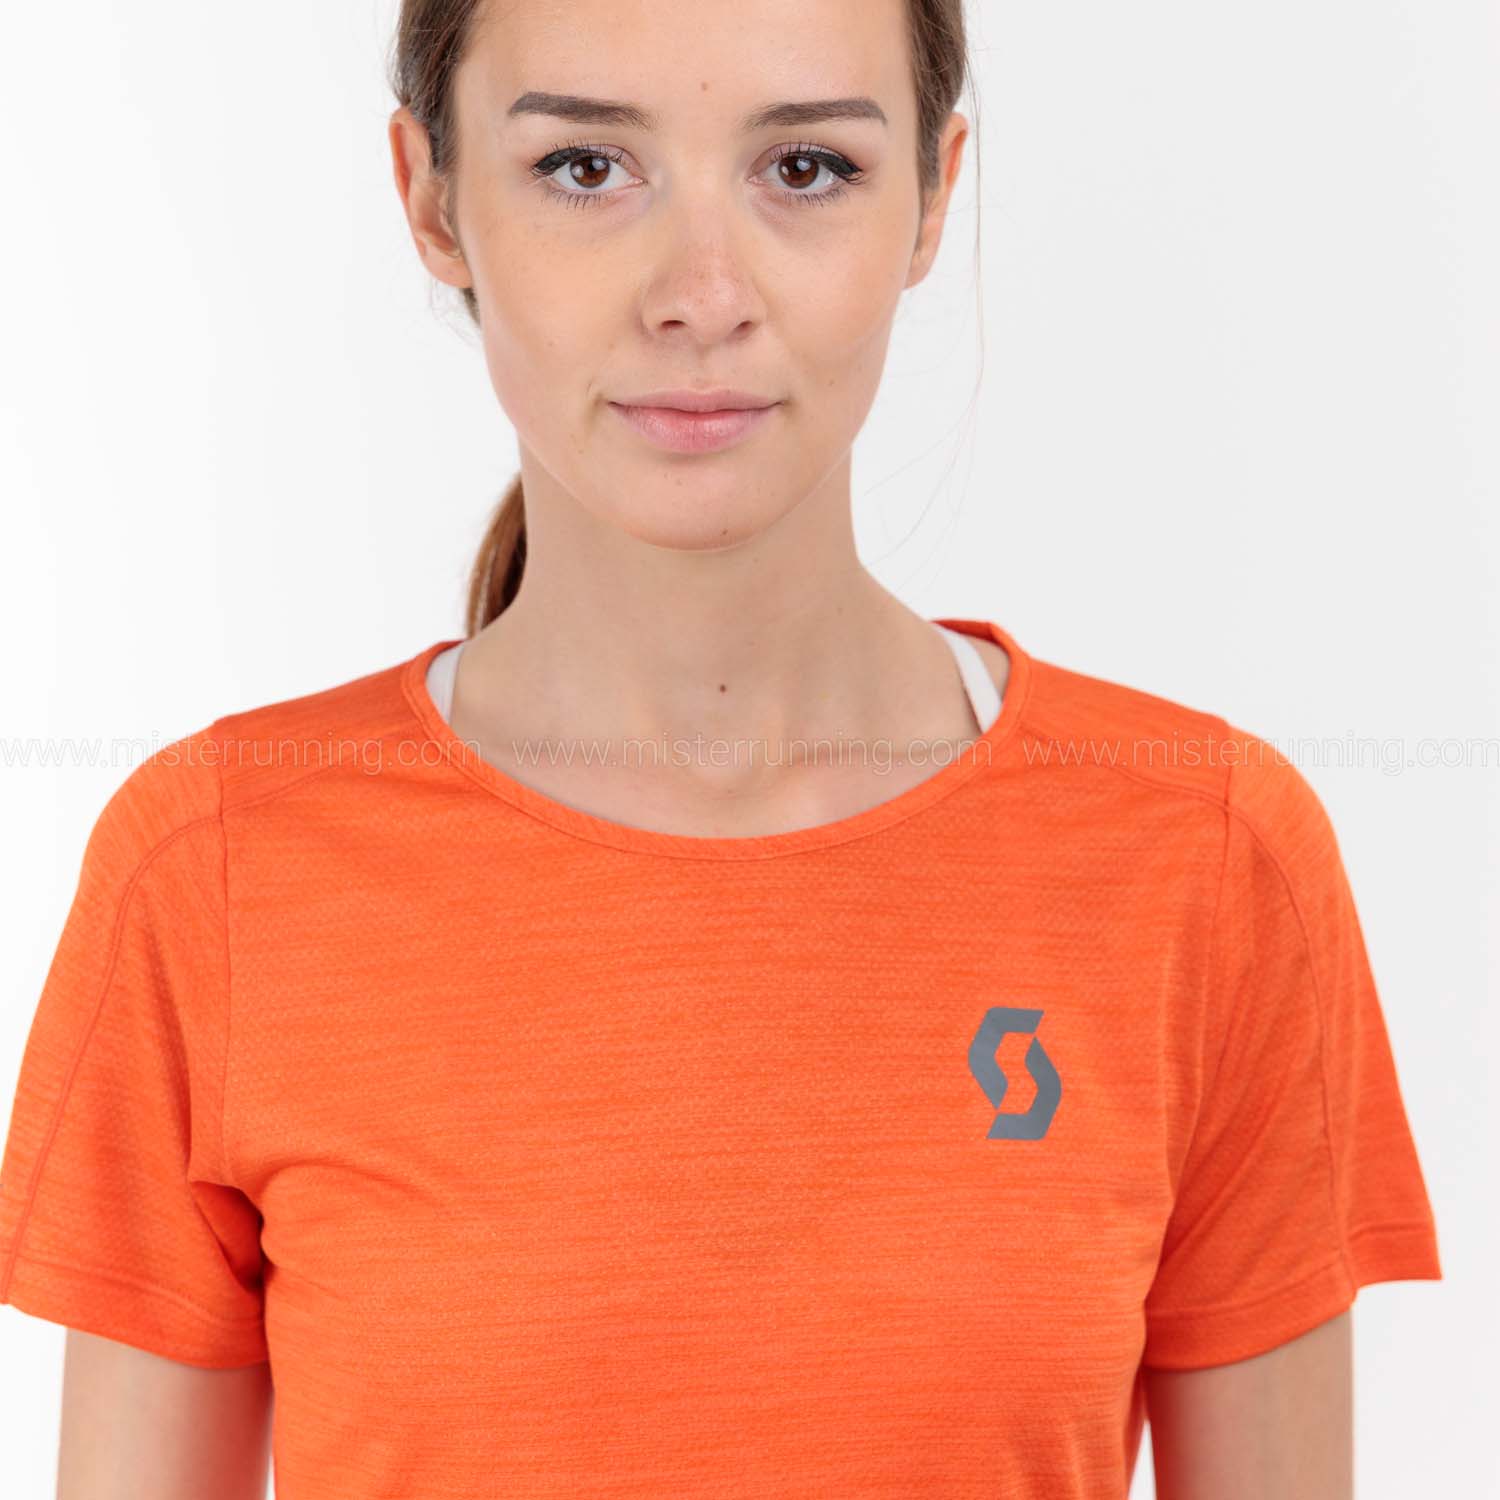 Scott Endurance LT Camiseta - Brange Orange